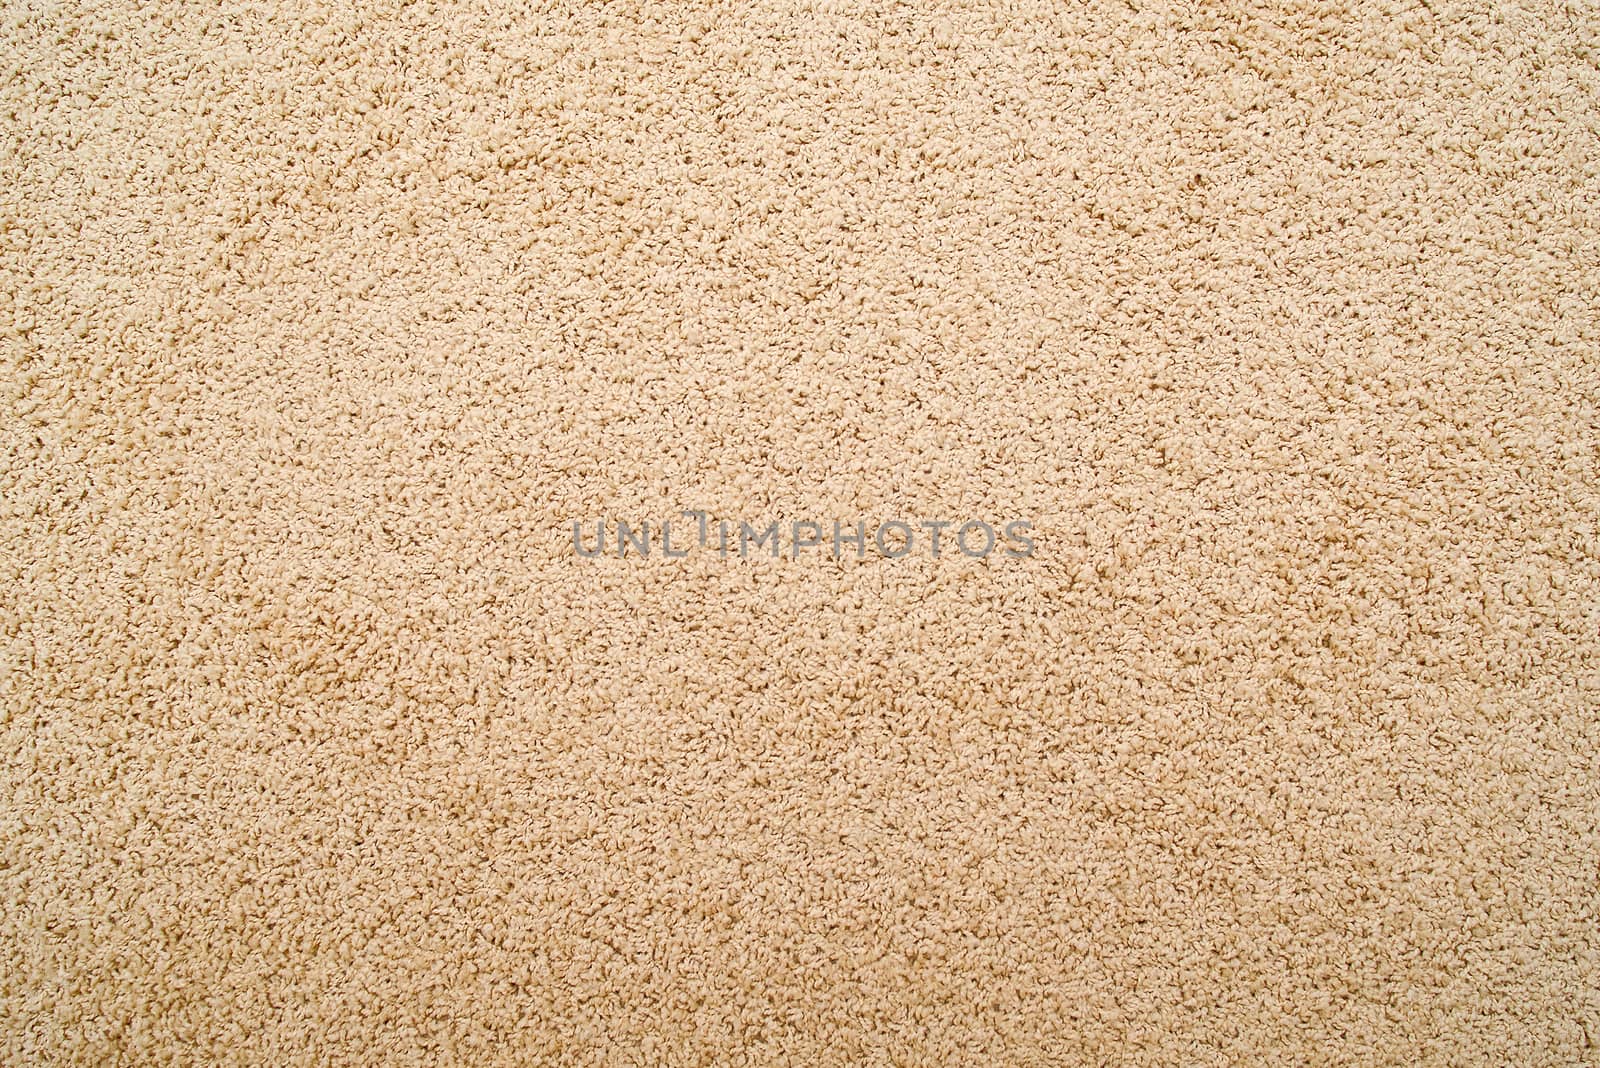 Carpet texture by stevanovicigor